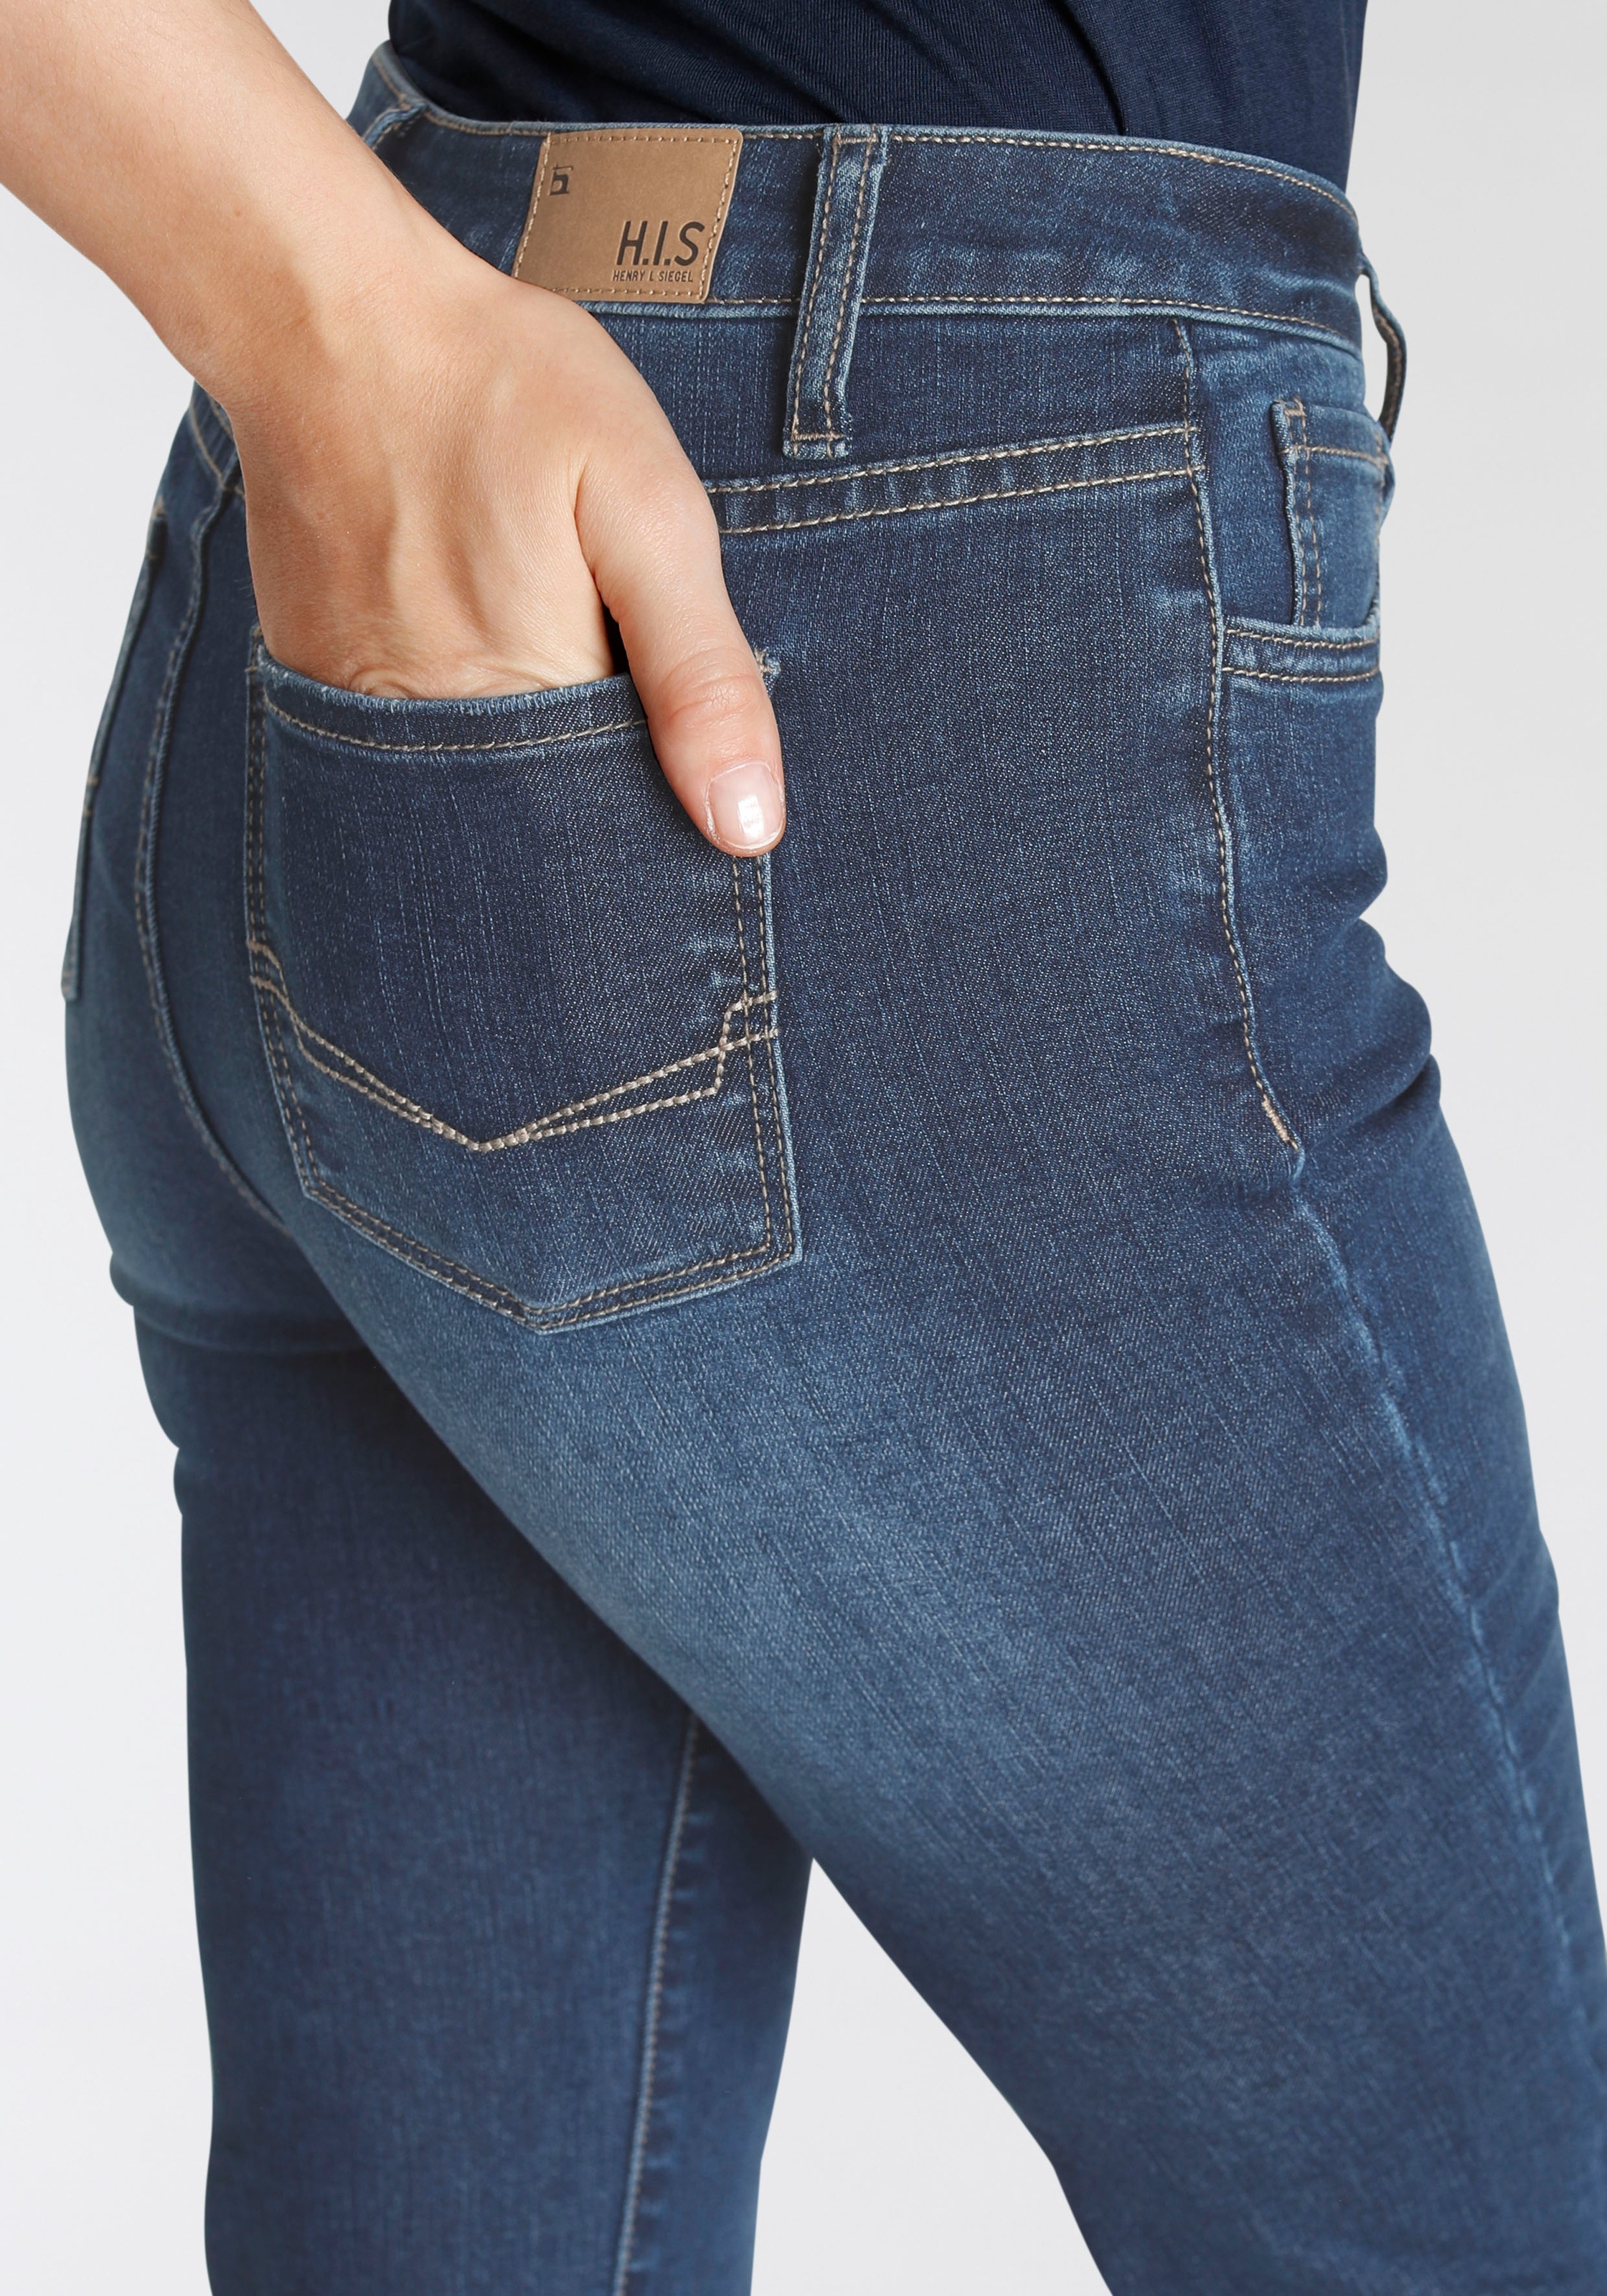 SLIT«, shoppen wassersparende WASH OZON durch H.I.S Ökologische, Produktion »SLIM-FIT 5-Pocket-Jeans